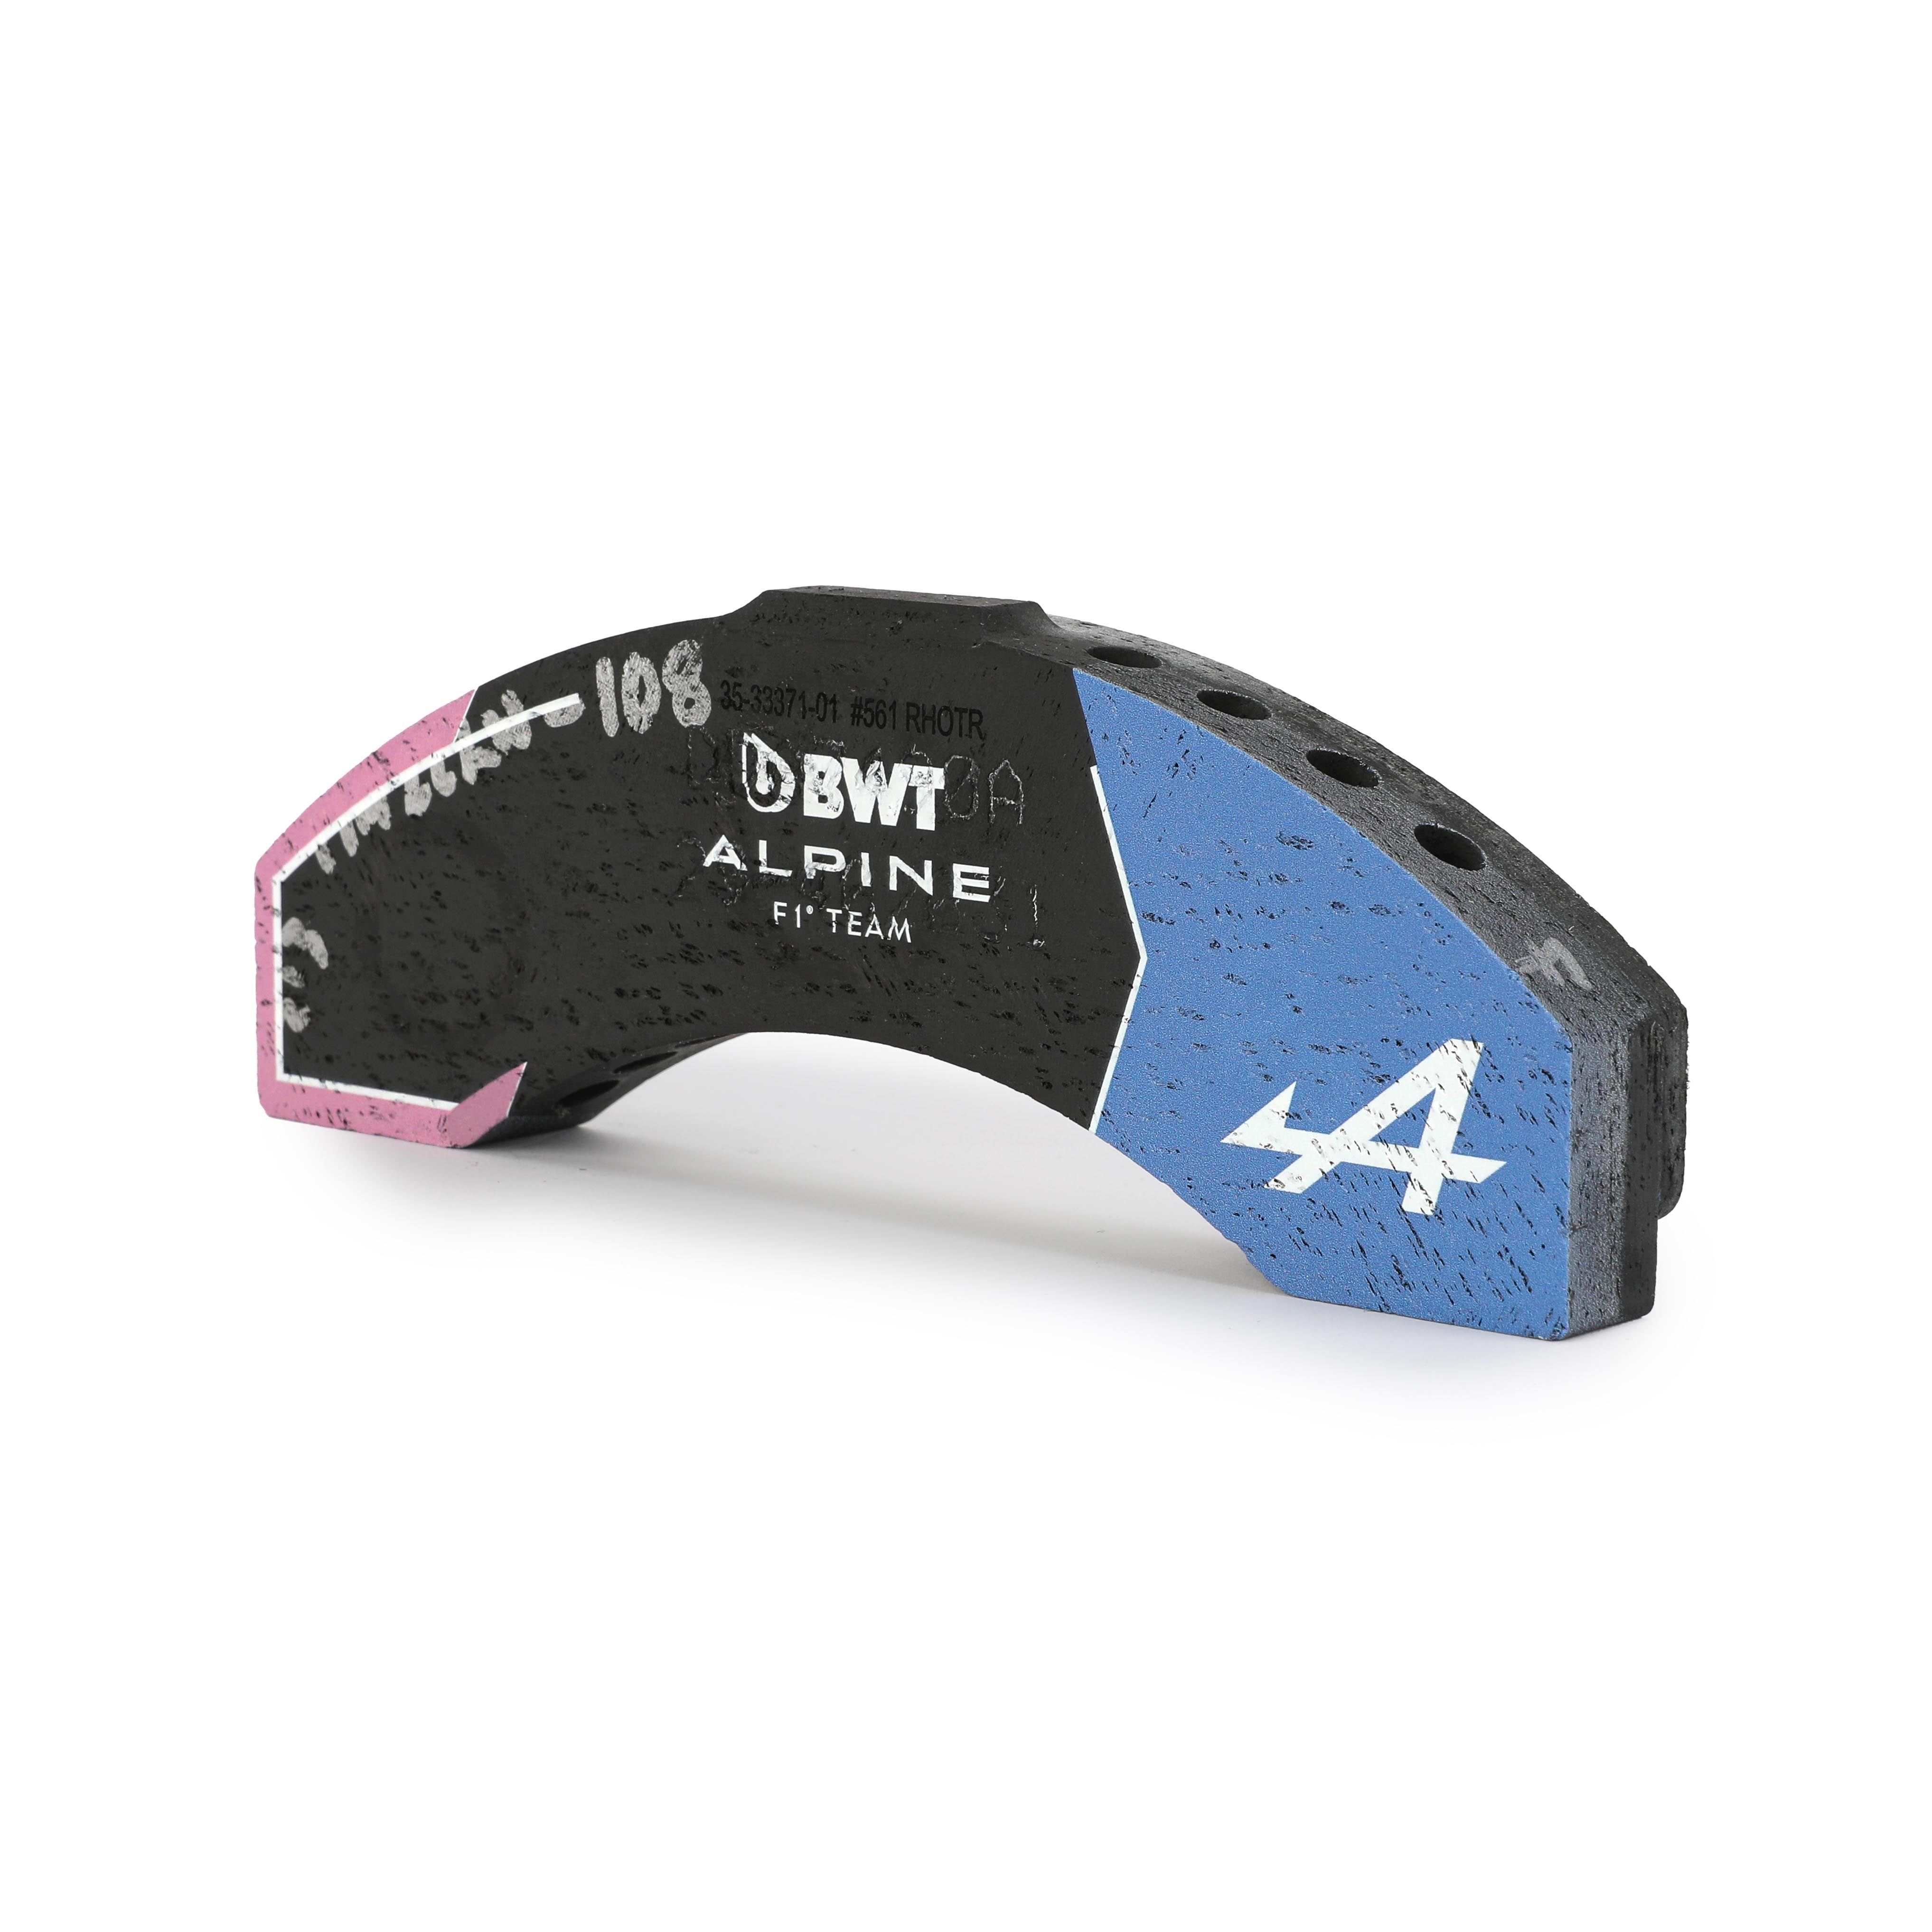 BWT Alpine F1 Team Branded Brake Pads